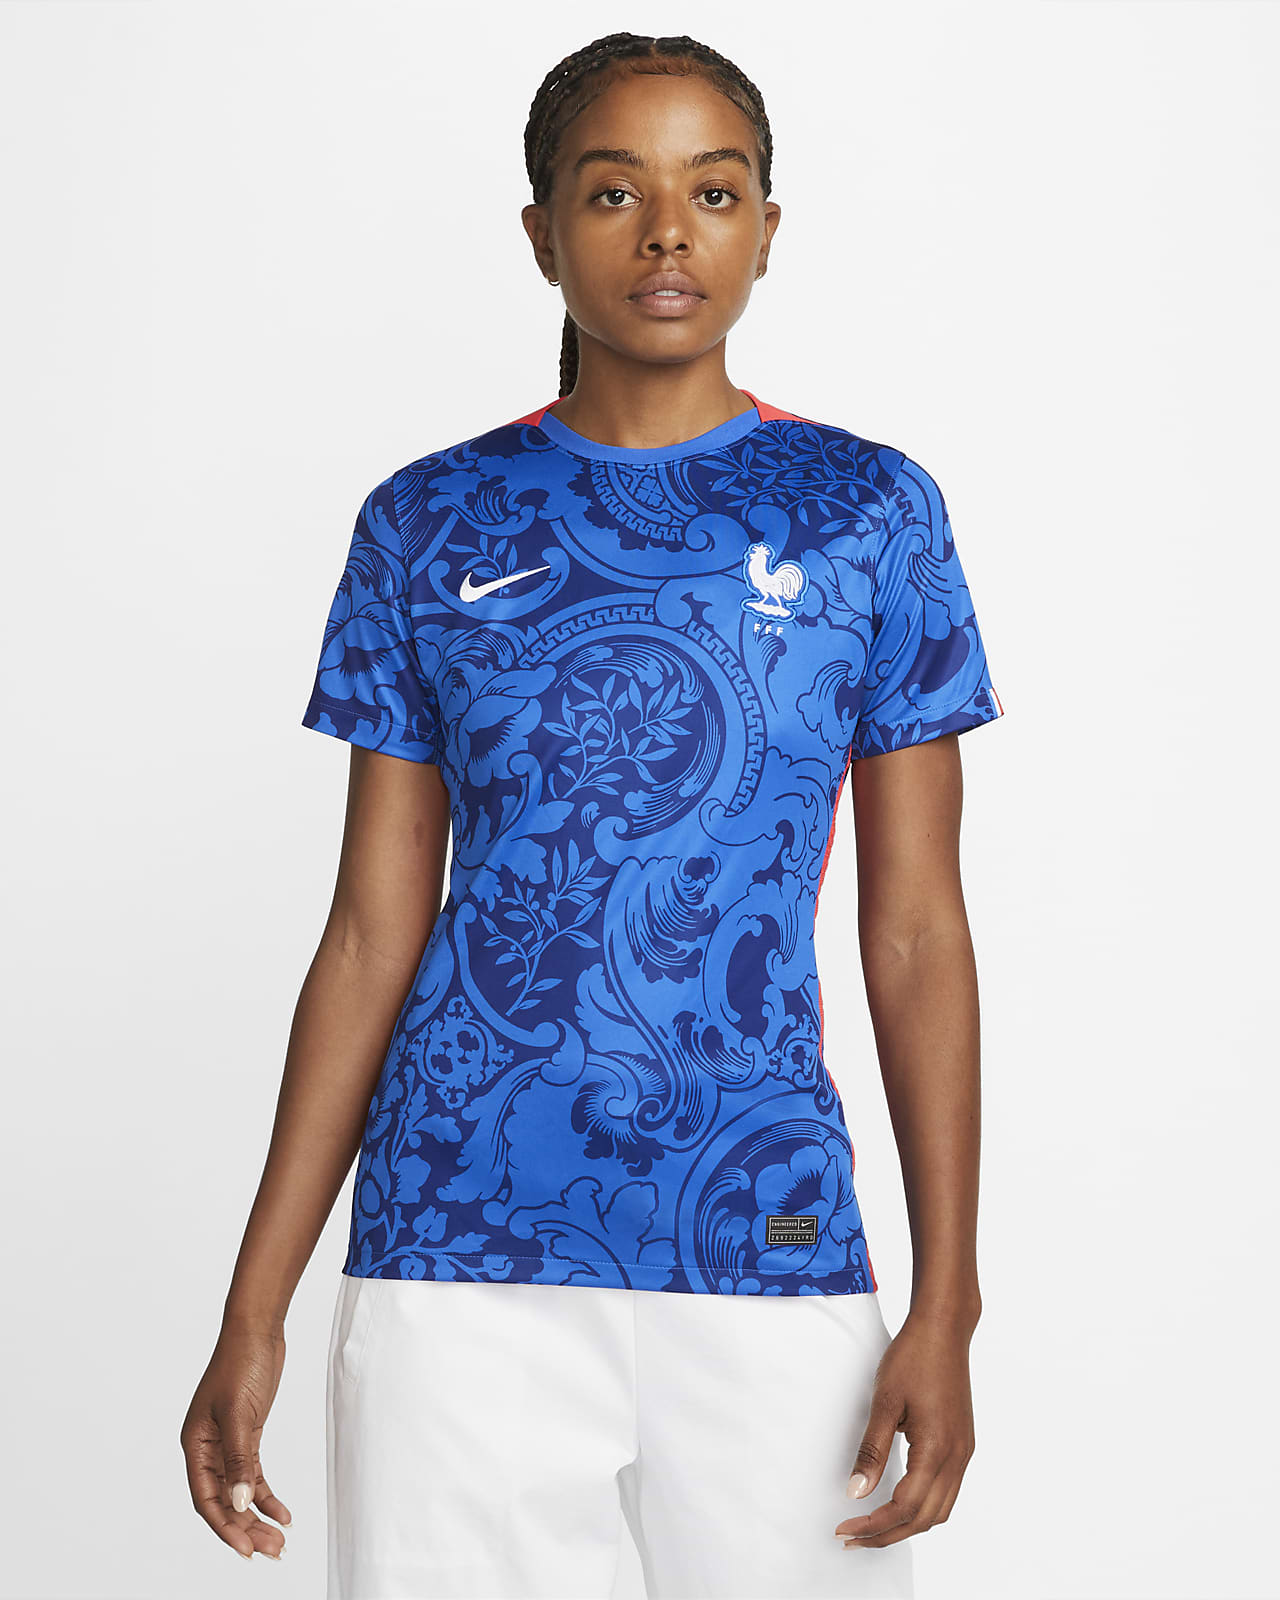 FFF 2022 Home Women's Nike Dri-FIT Football Shirt. Nike LU